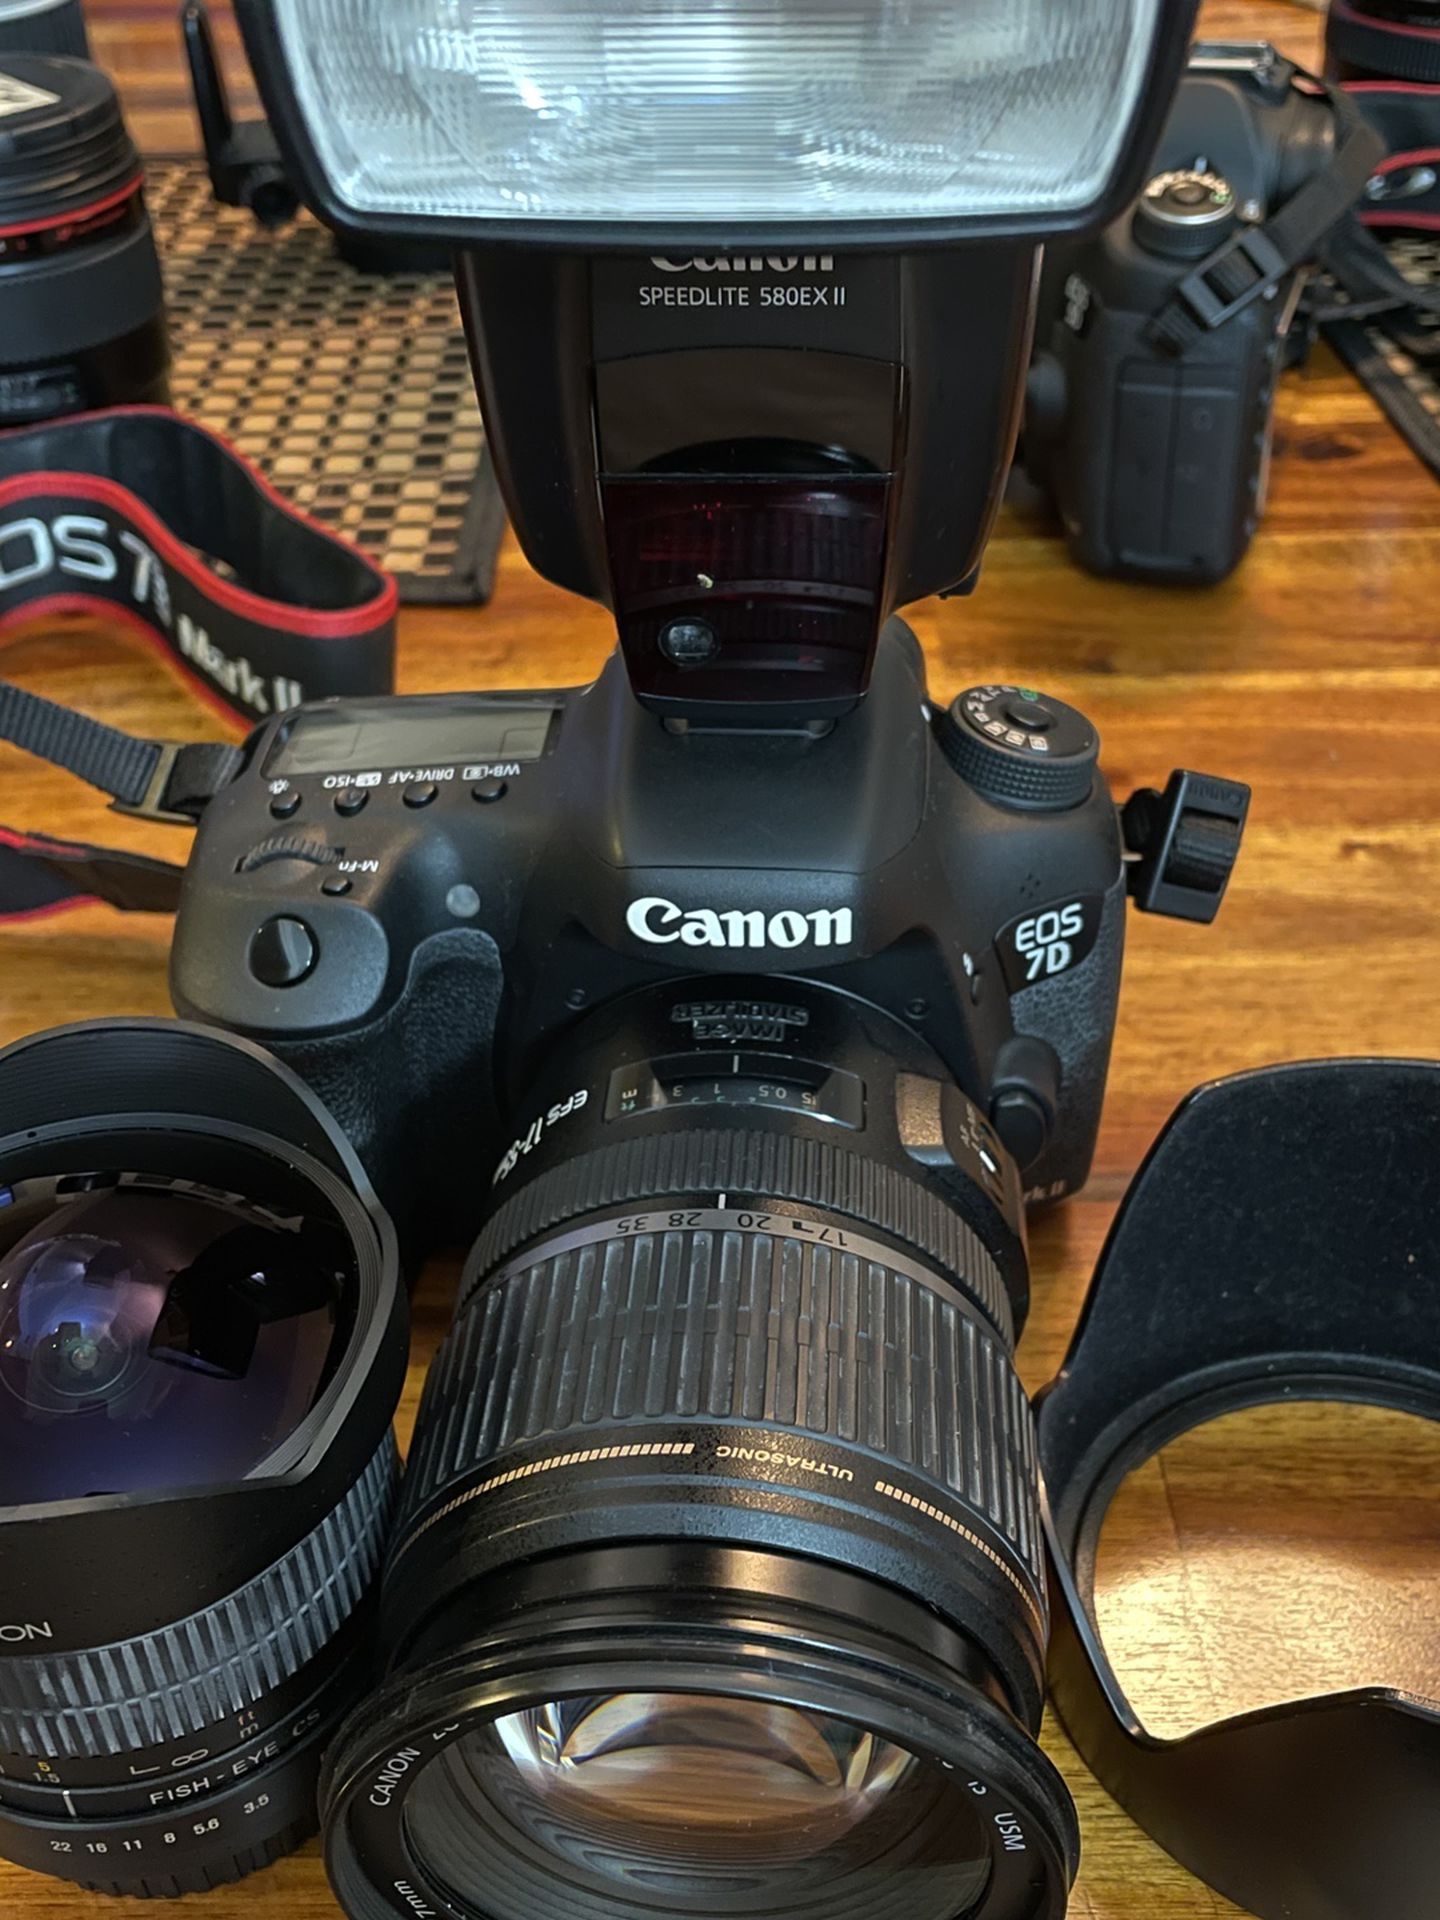 Canon 7dii, 17-55 2.8 I.S, 8mm Fisheye Lens